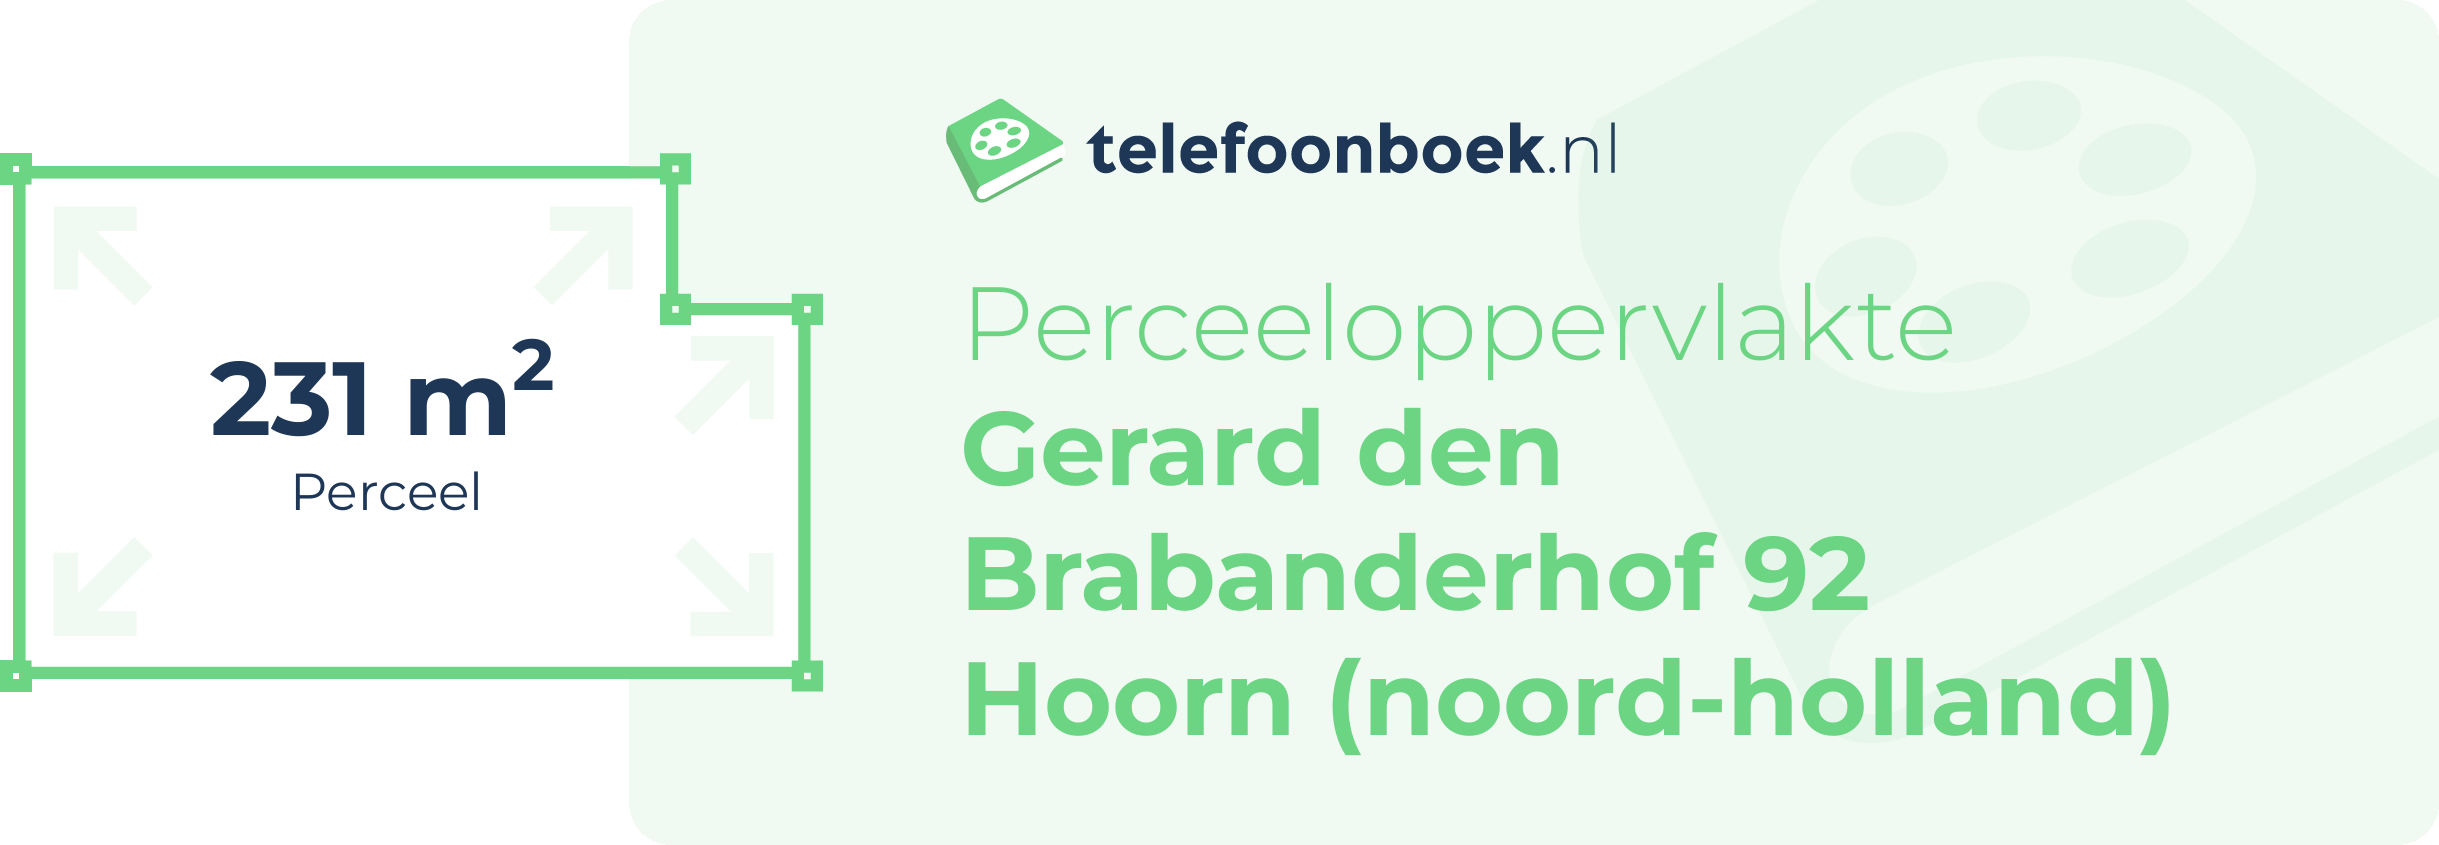 Perceeloppervlakte Gerard Den Brabanderhof 92 Hoorn (Noord-Holland)